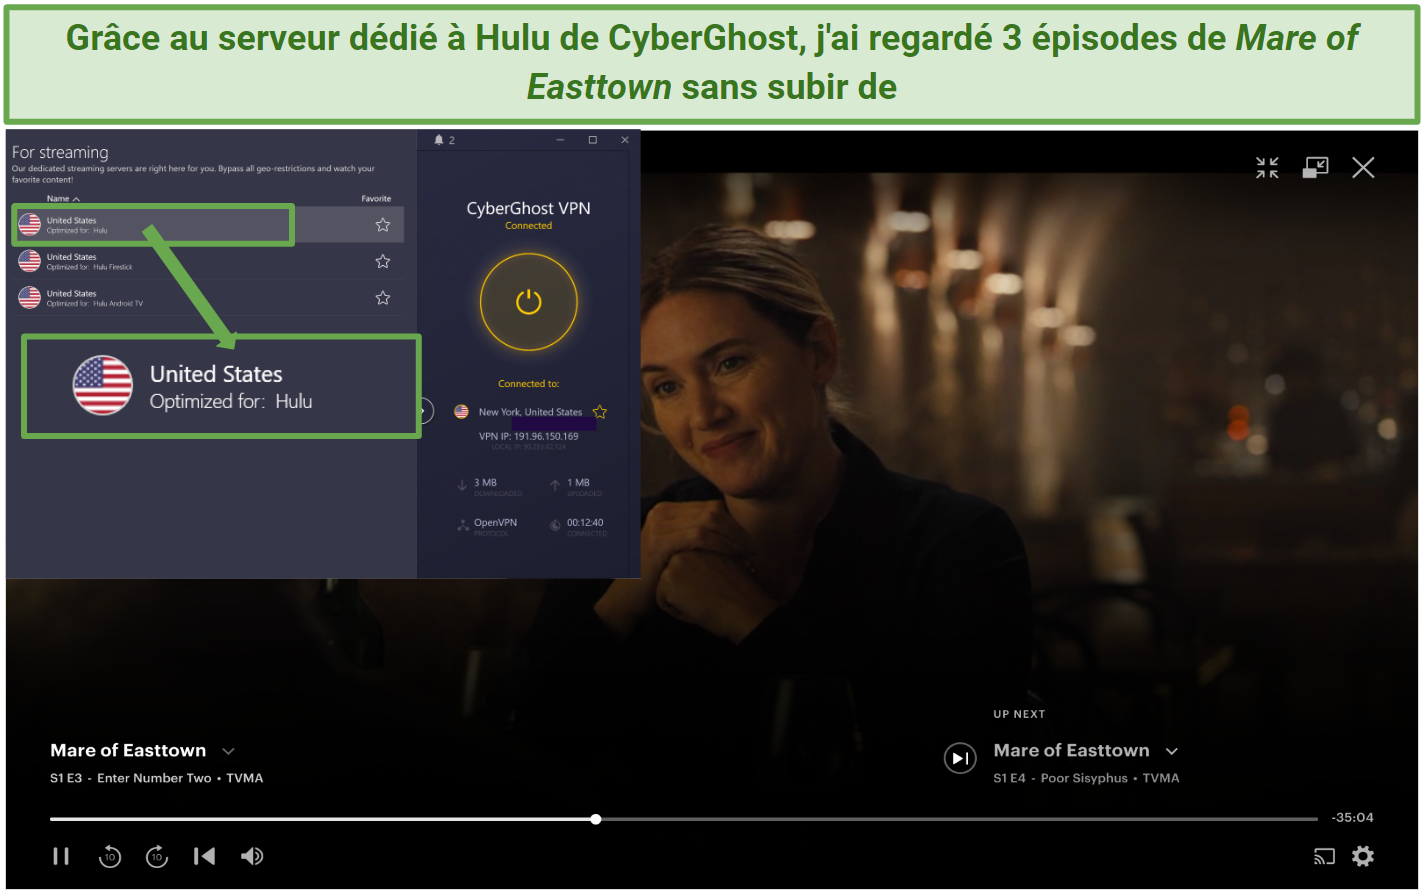 CyberGhost's Hulu-optimized streaming server unblocking Hulu